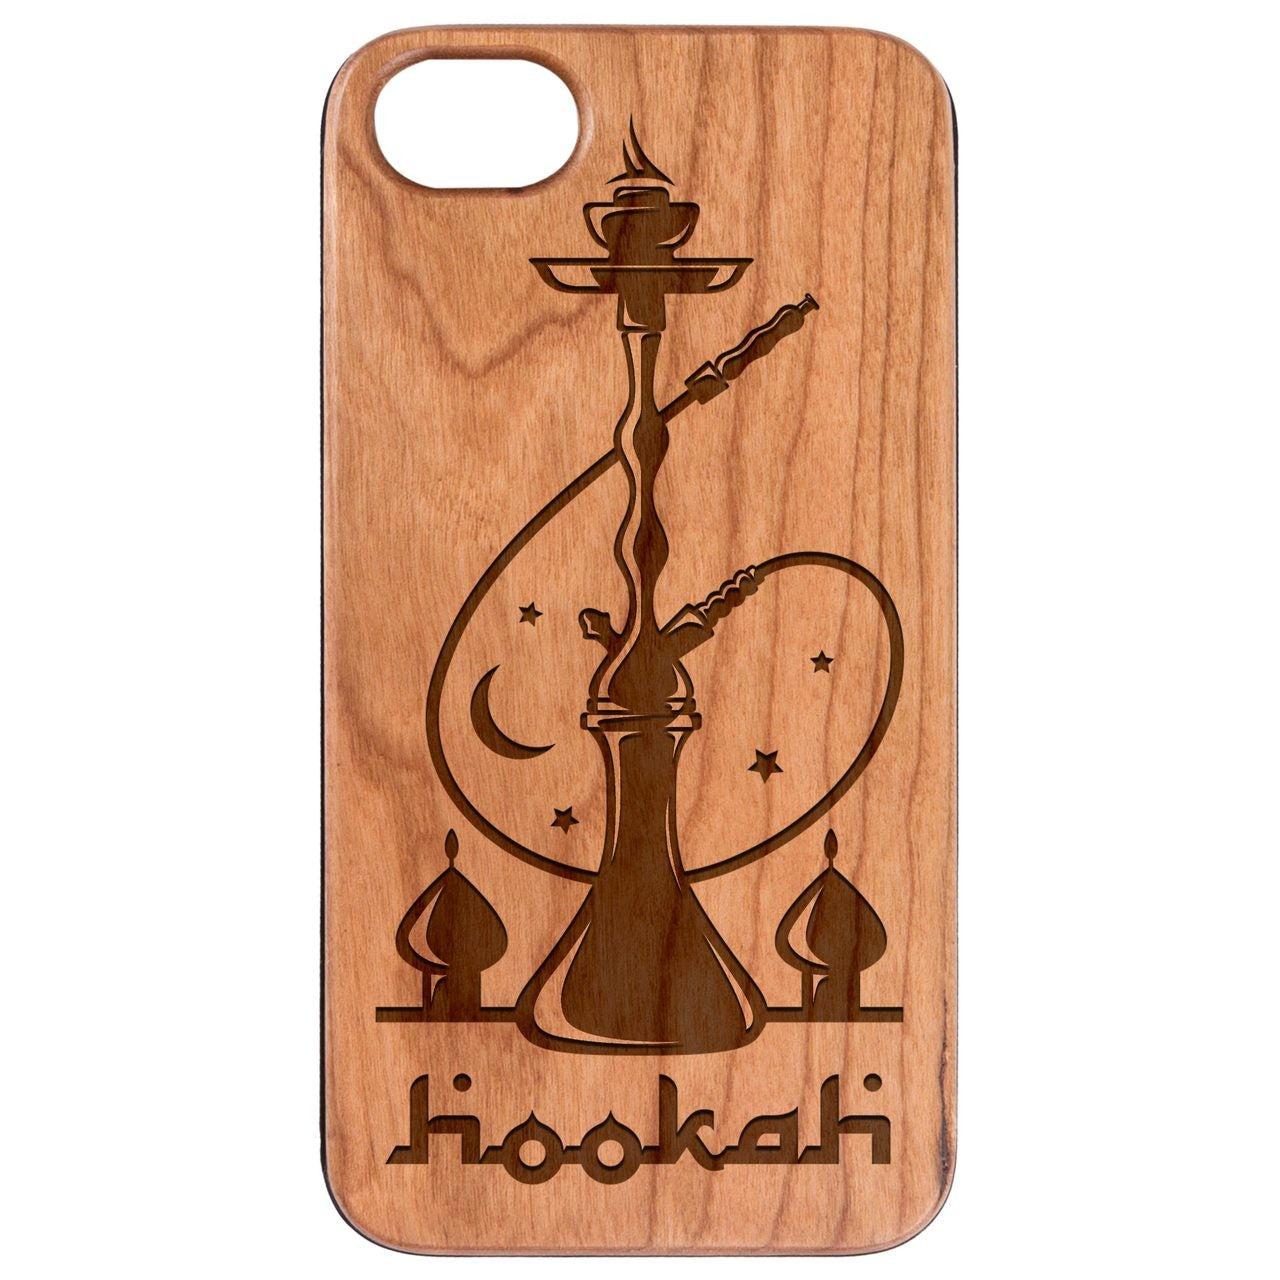  Hookah - Engraved - Wooden Phone Case - IPhone 13 Models